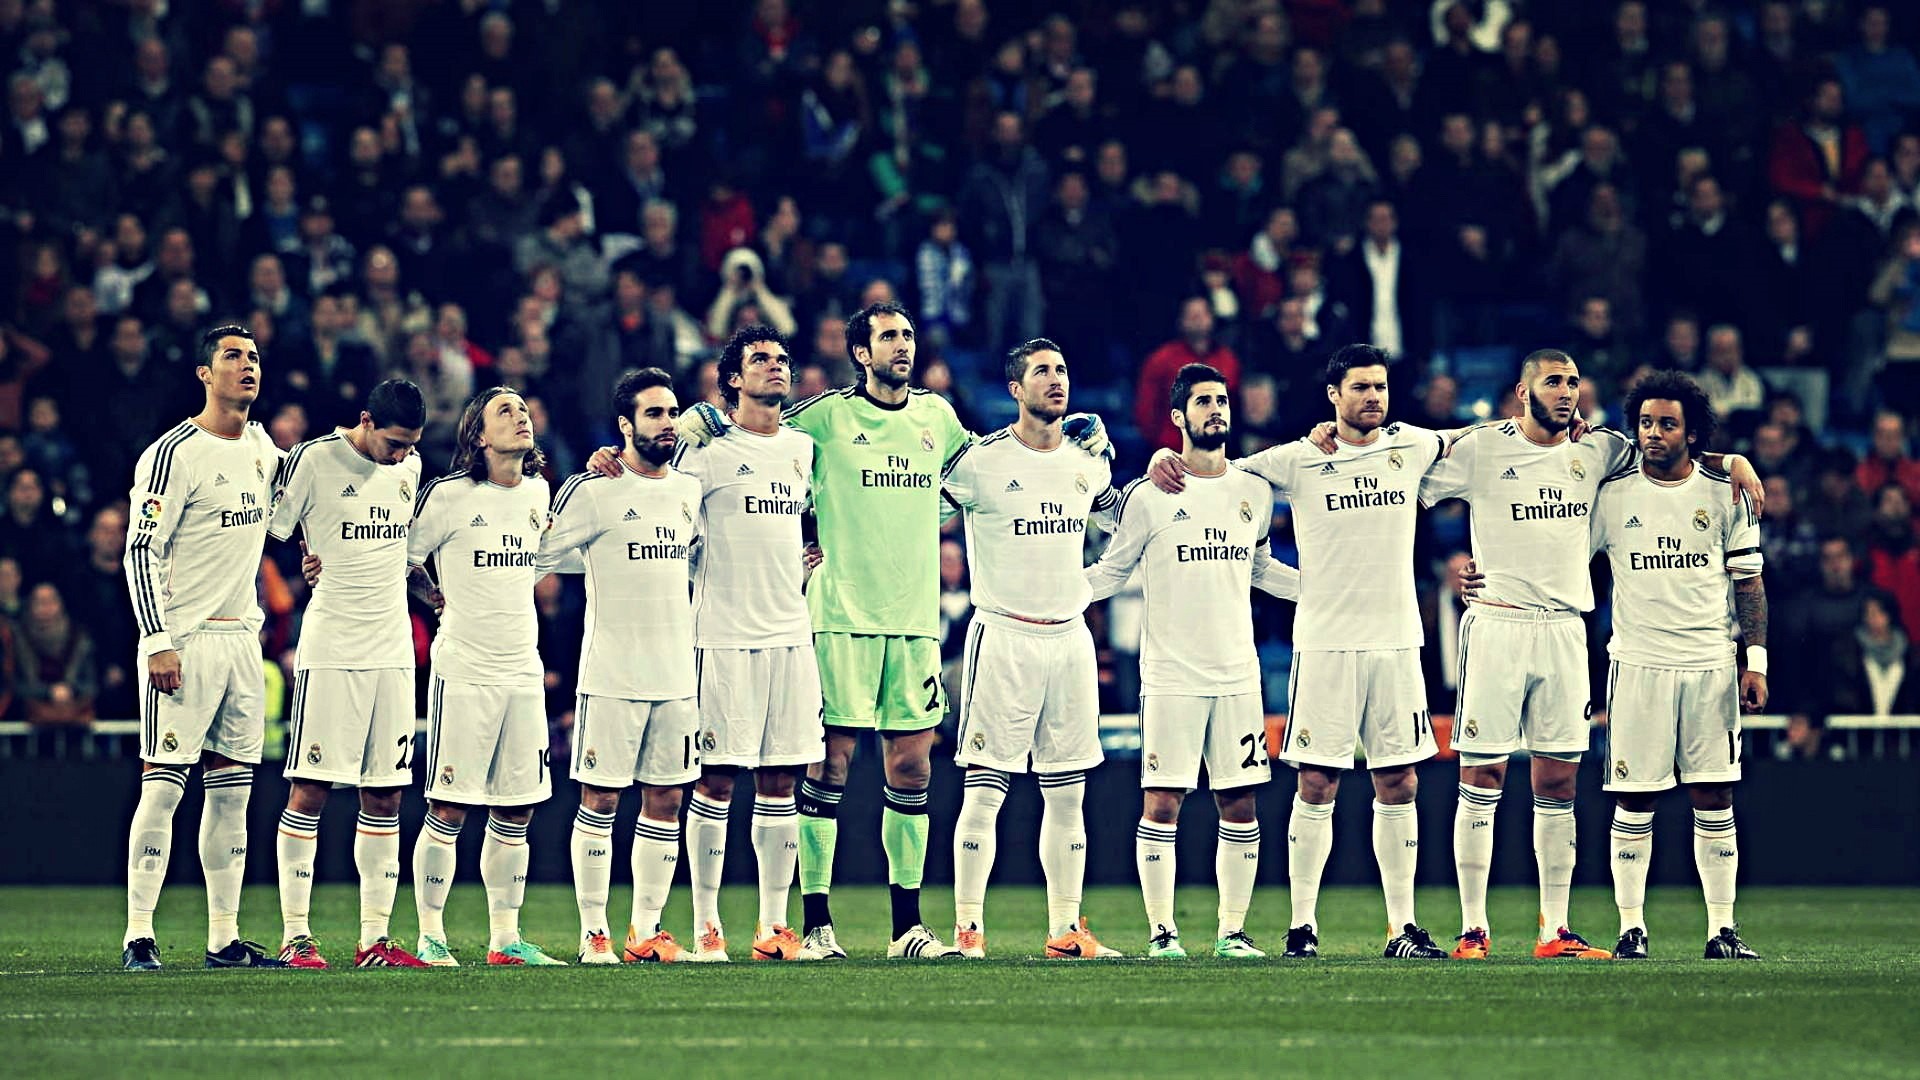 Real Madrid Wallpaper Image